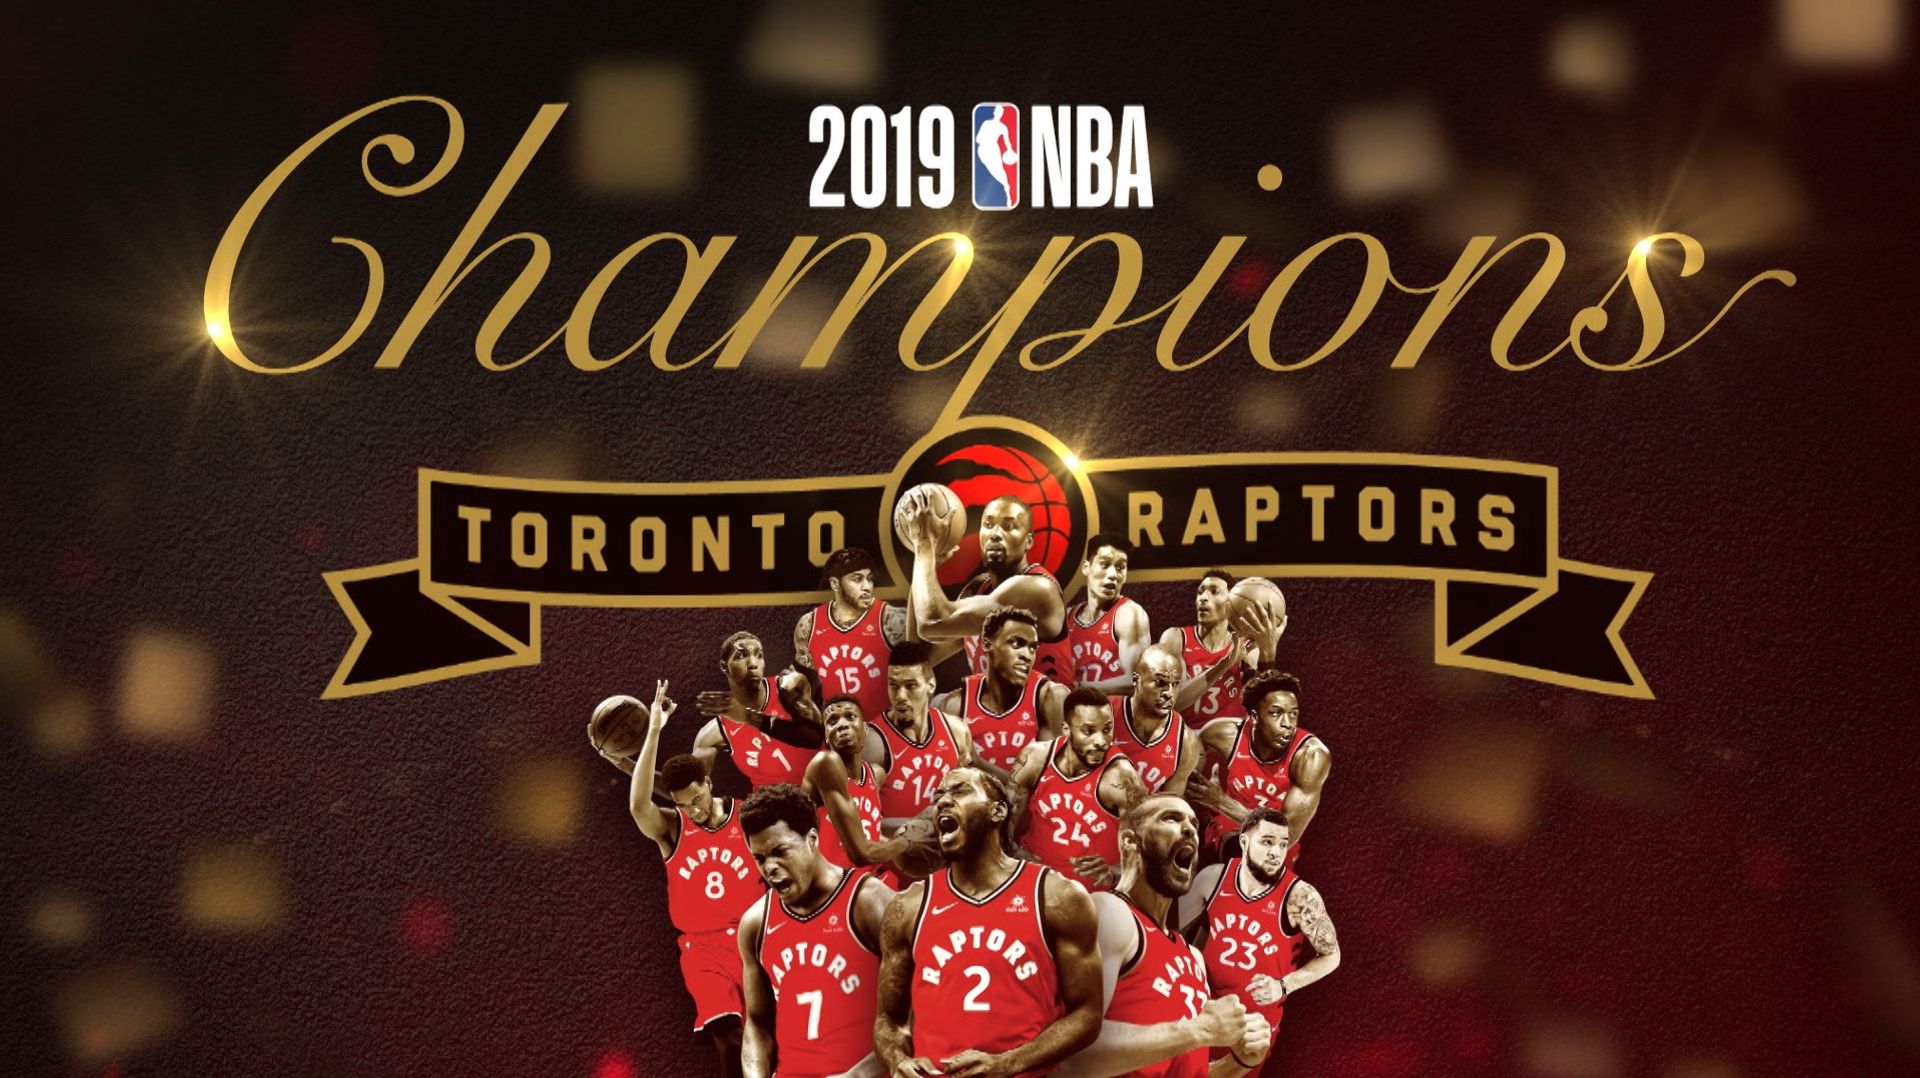 2019 NBA Champions: Toronto Raptors Backdrop